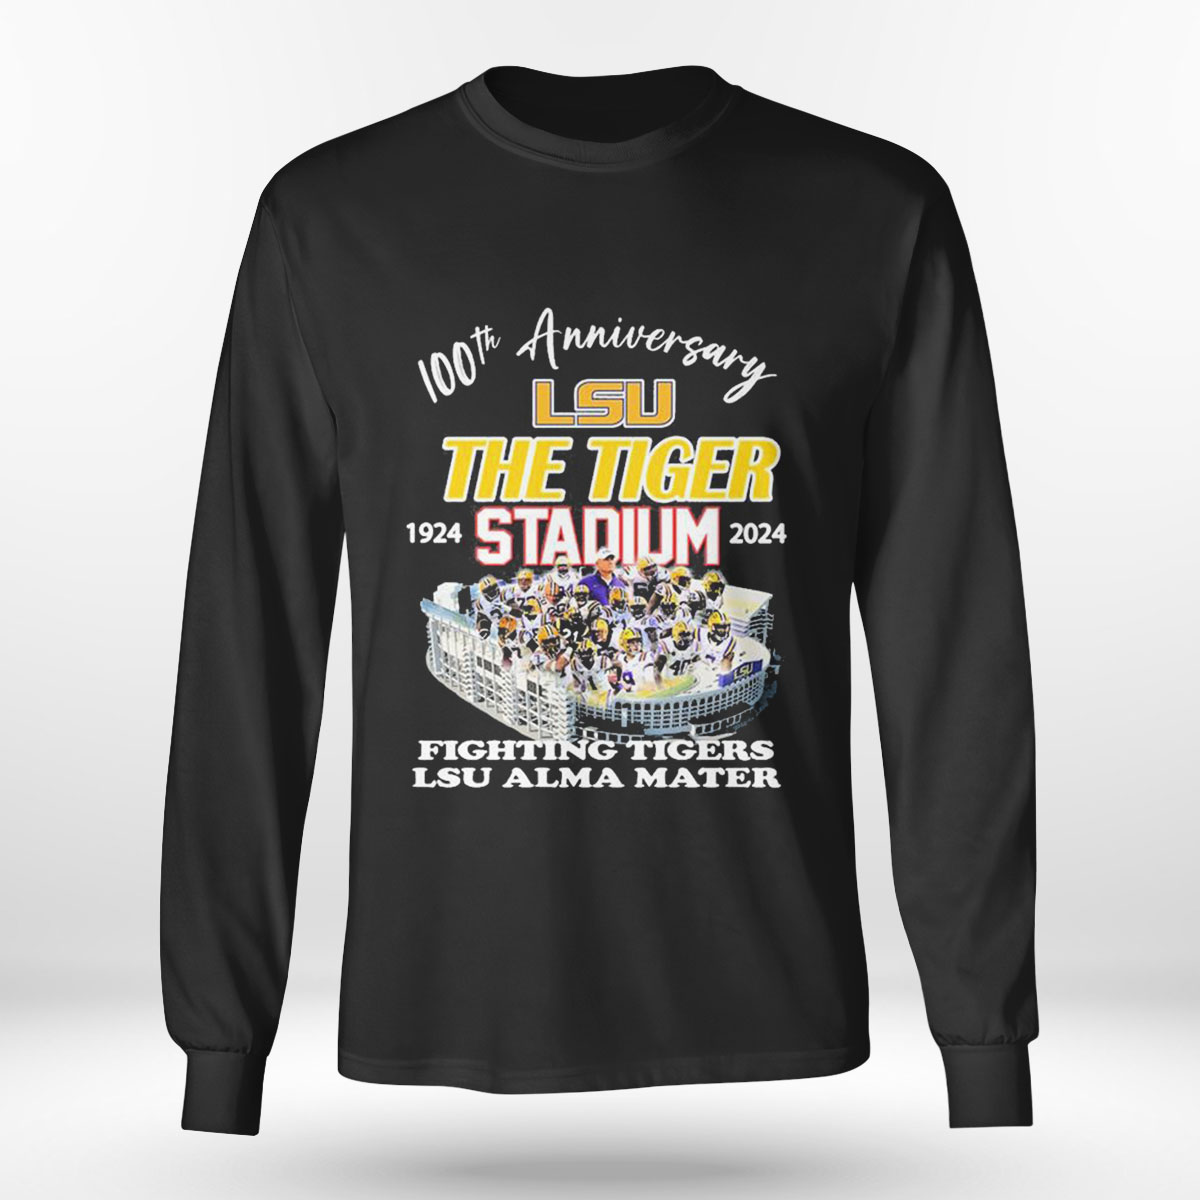 100th Anniversary Lsu The Tiger 1924 Stadium Team Fighting Tigers Lsu Alma Mater T-shirt